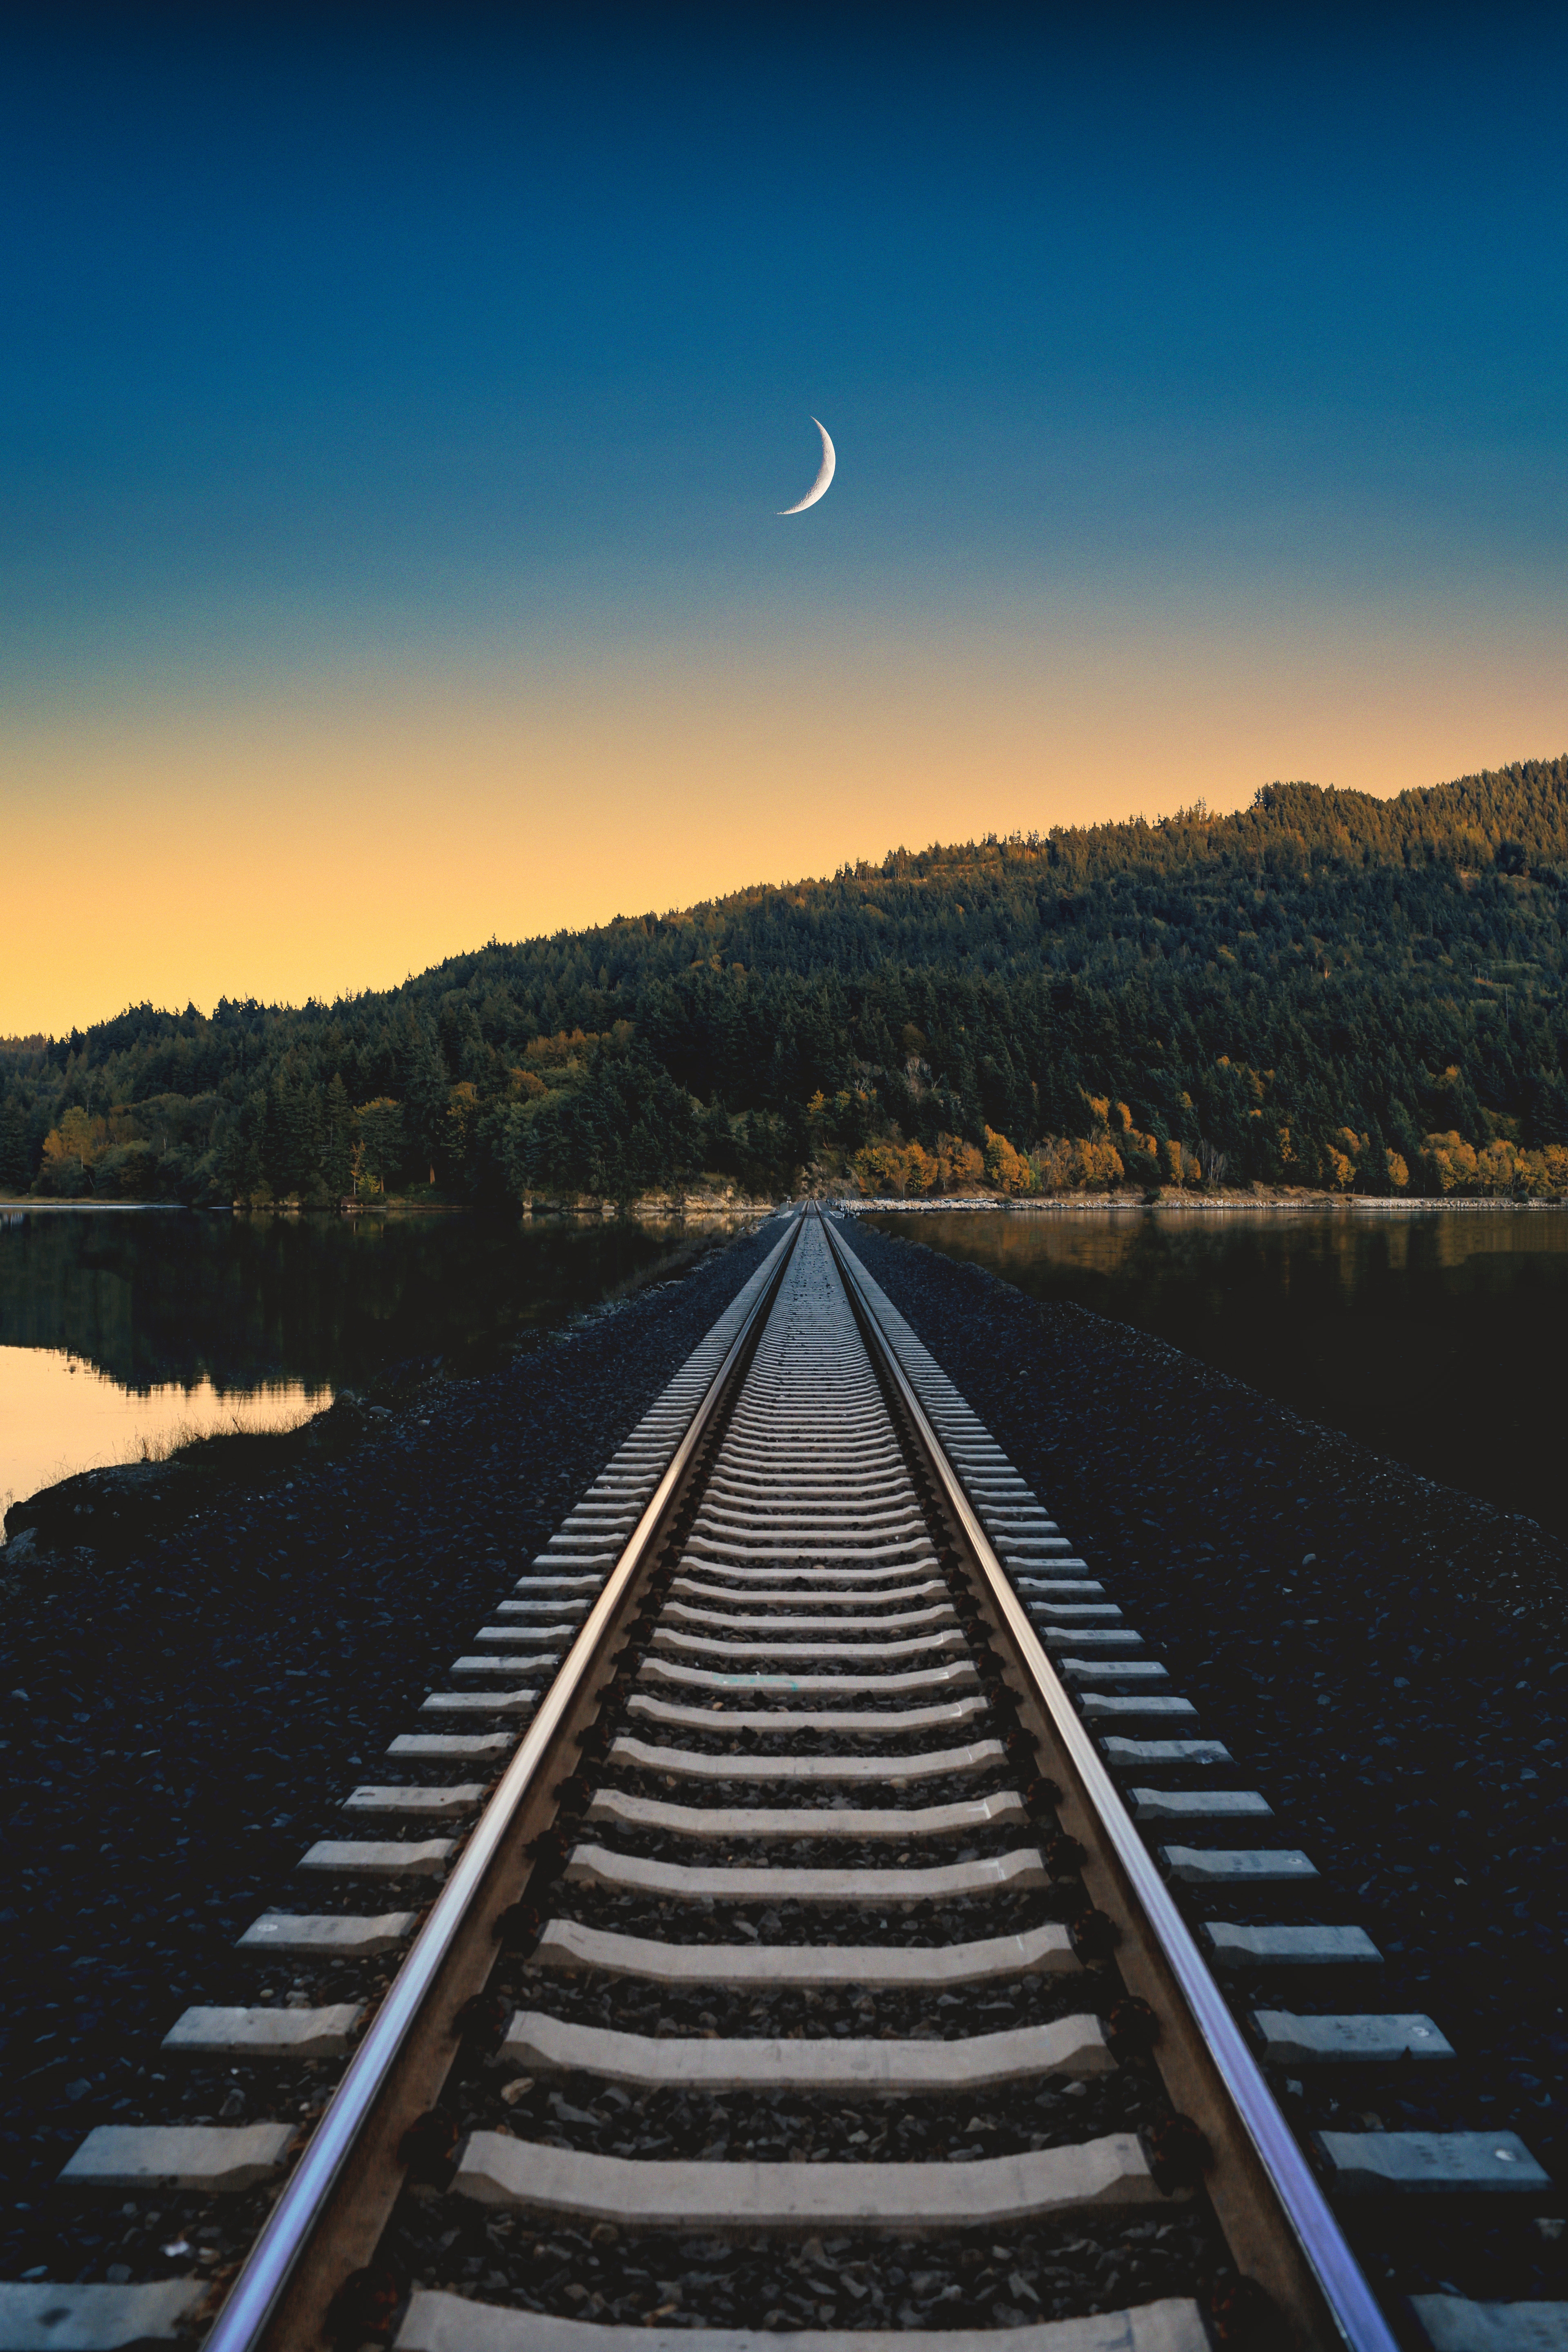 HD wallpaper, Crescent Moon, Aesthetic, Railroad, Mountain, Rail Track, Landscape, Half Moon, River, Sunset